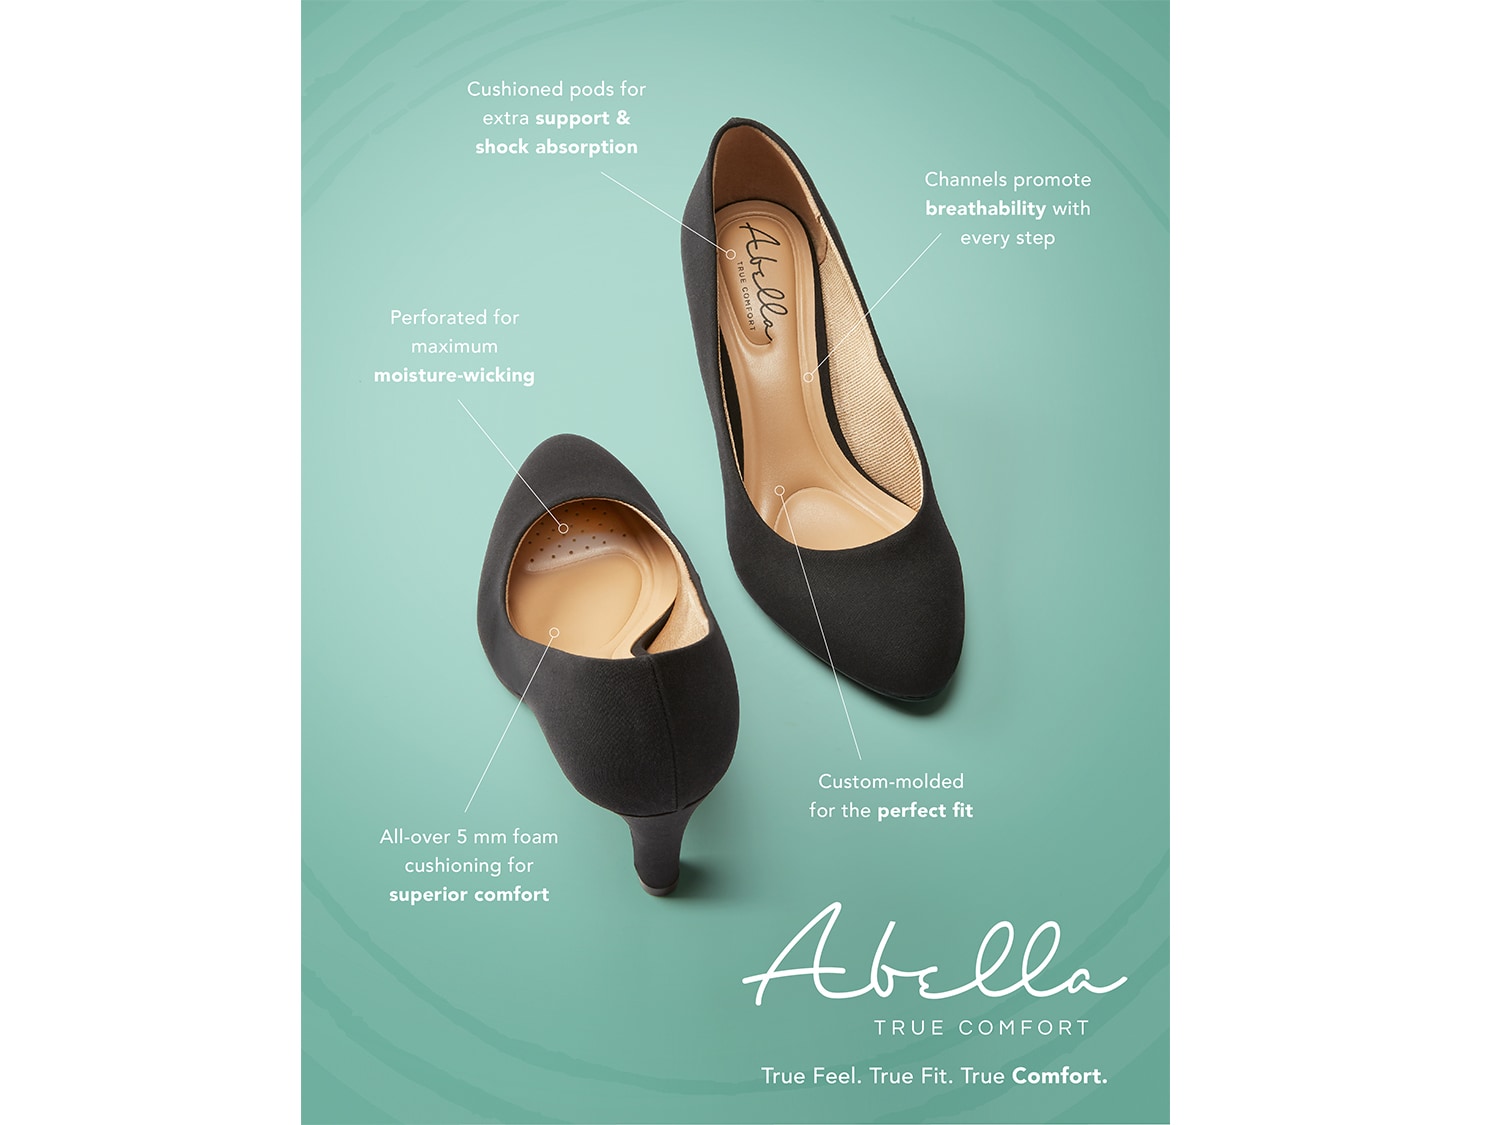 abella true comfort shoes